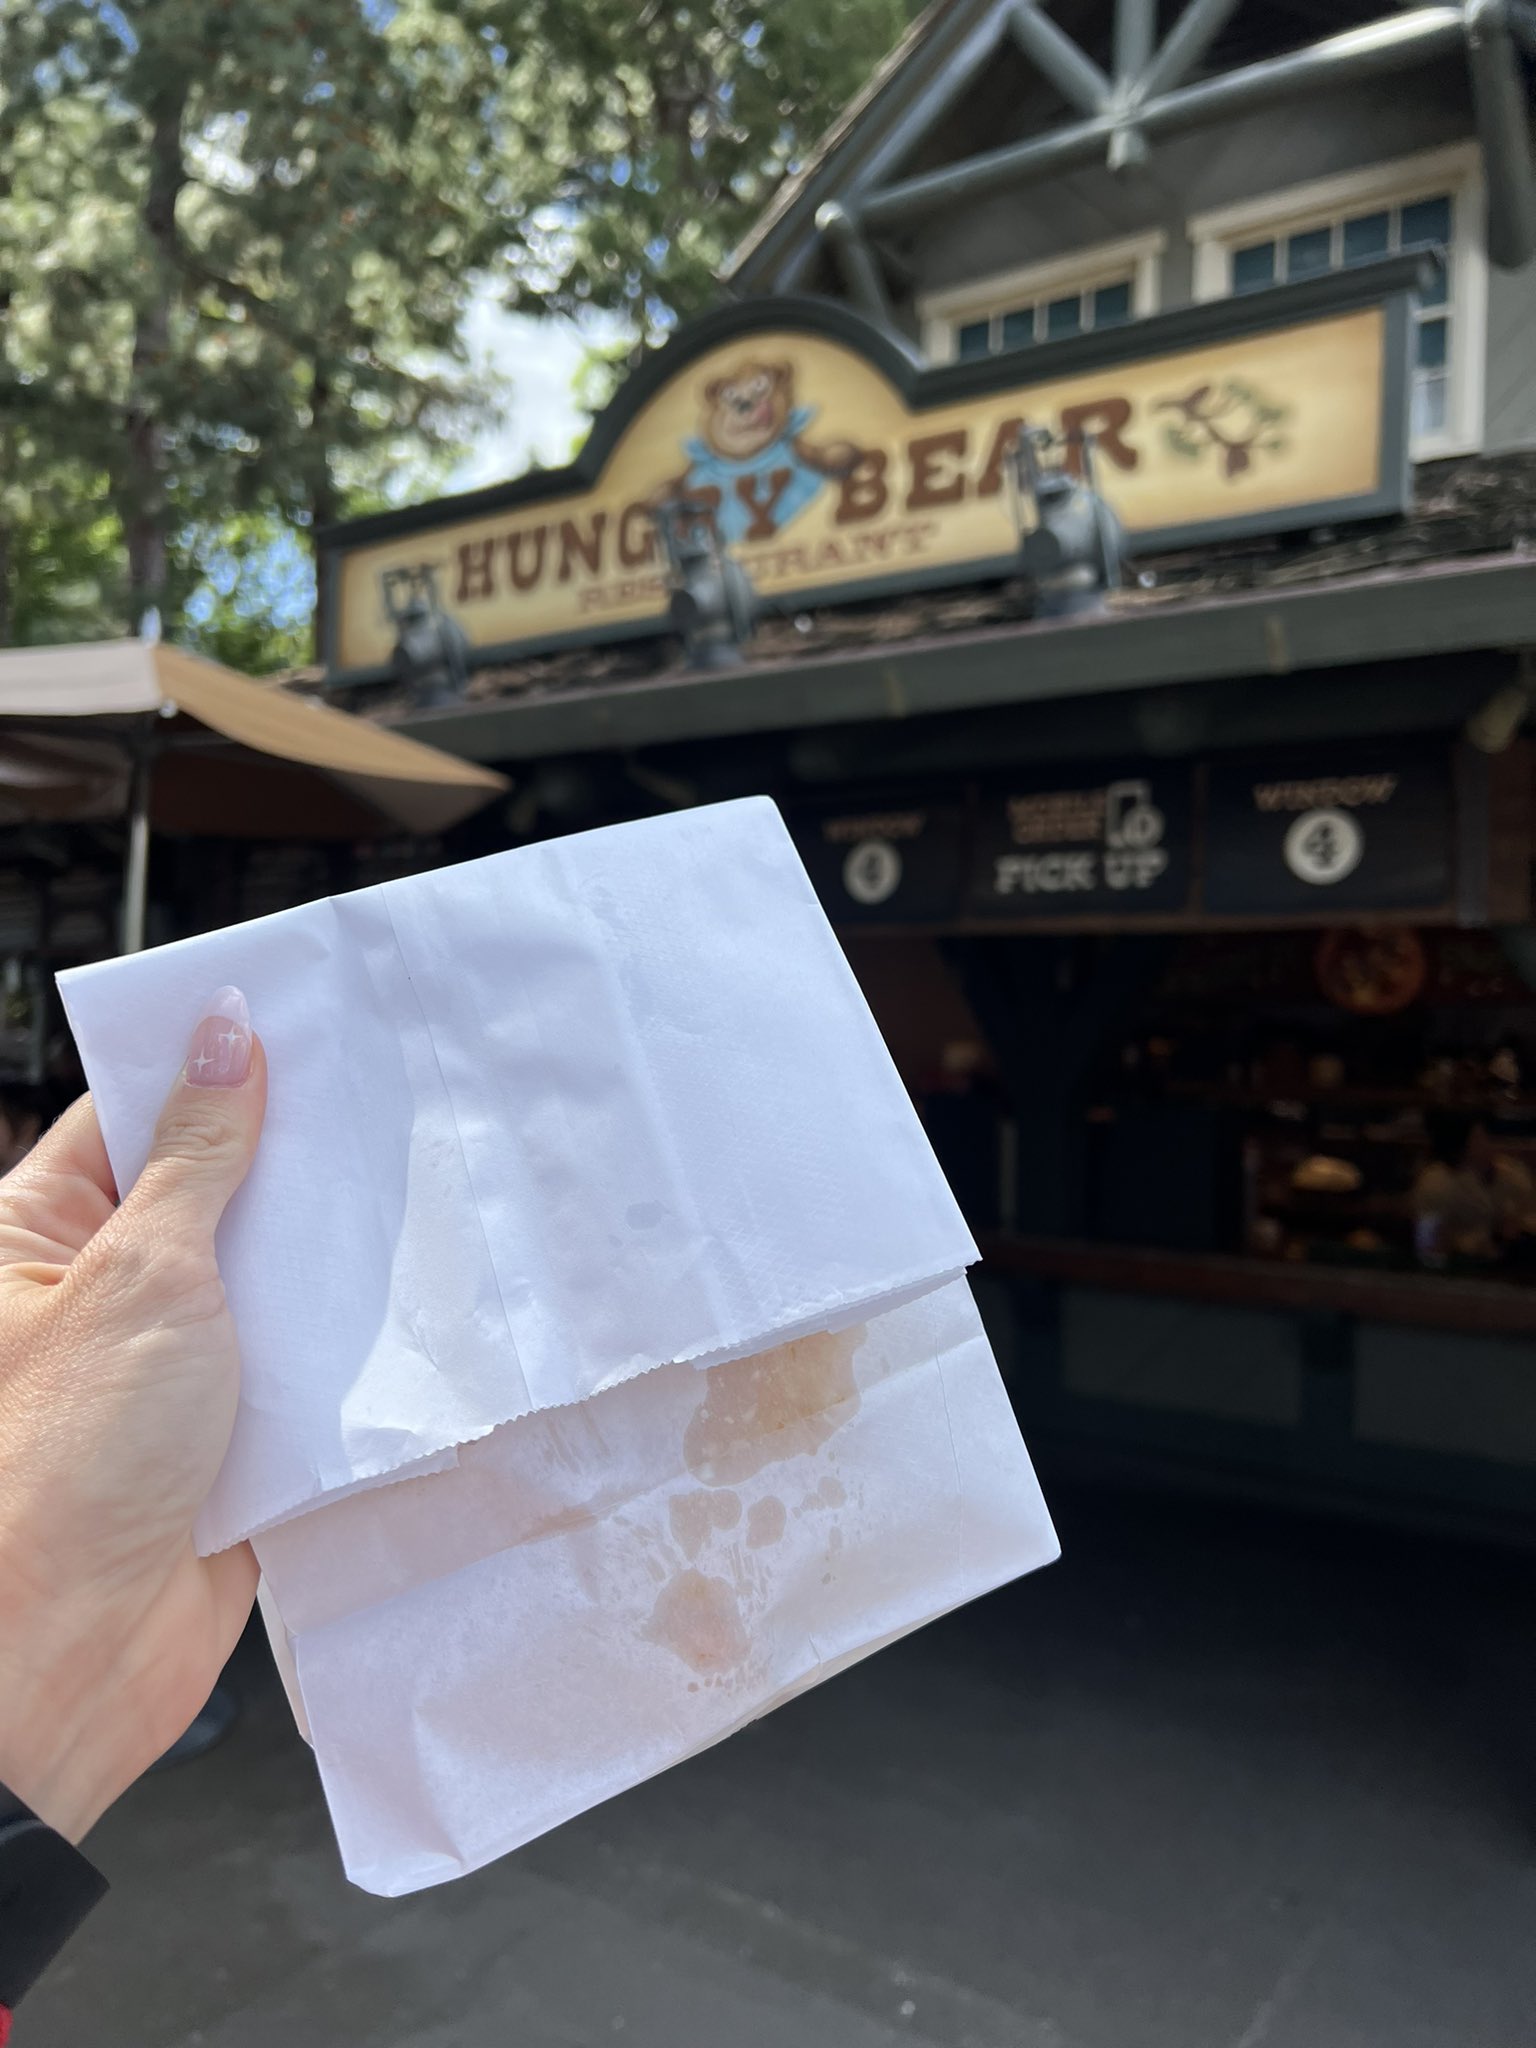 Hungry Bear Restaurant Disneyland